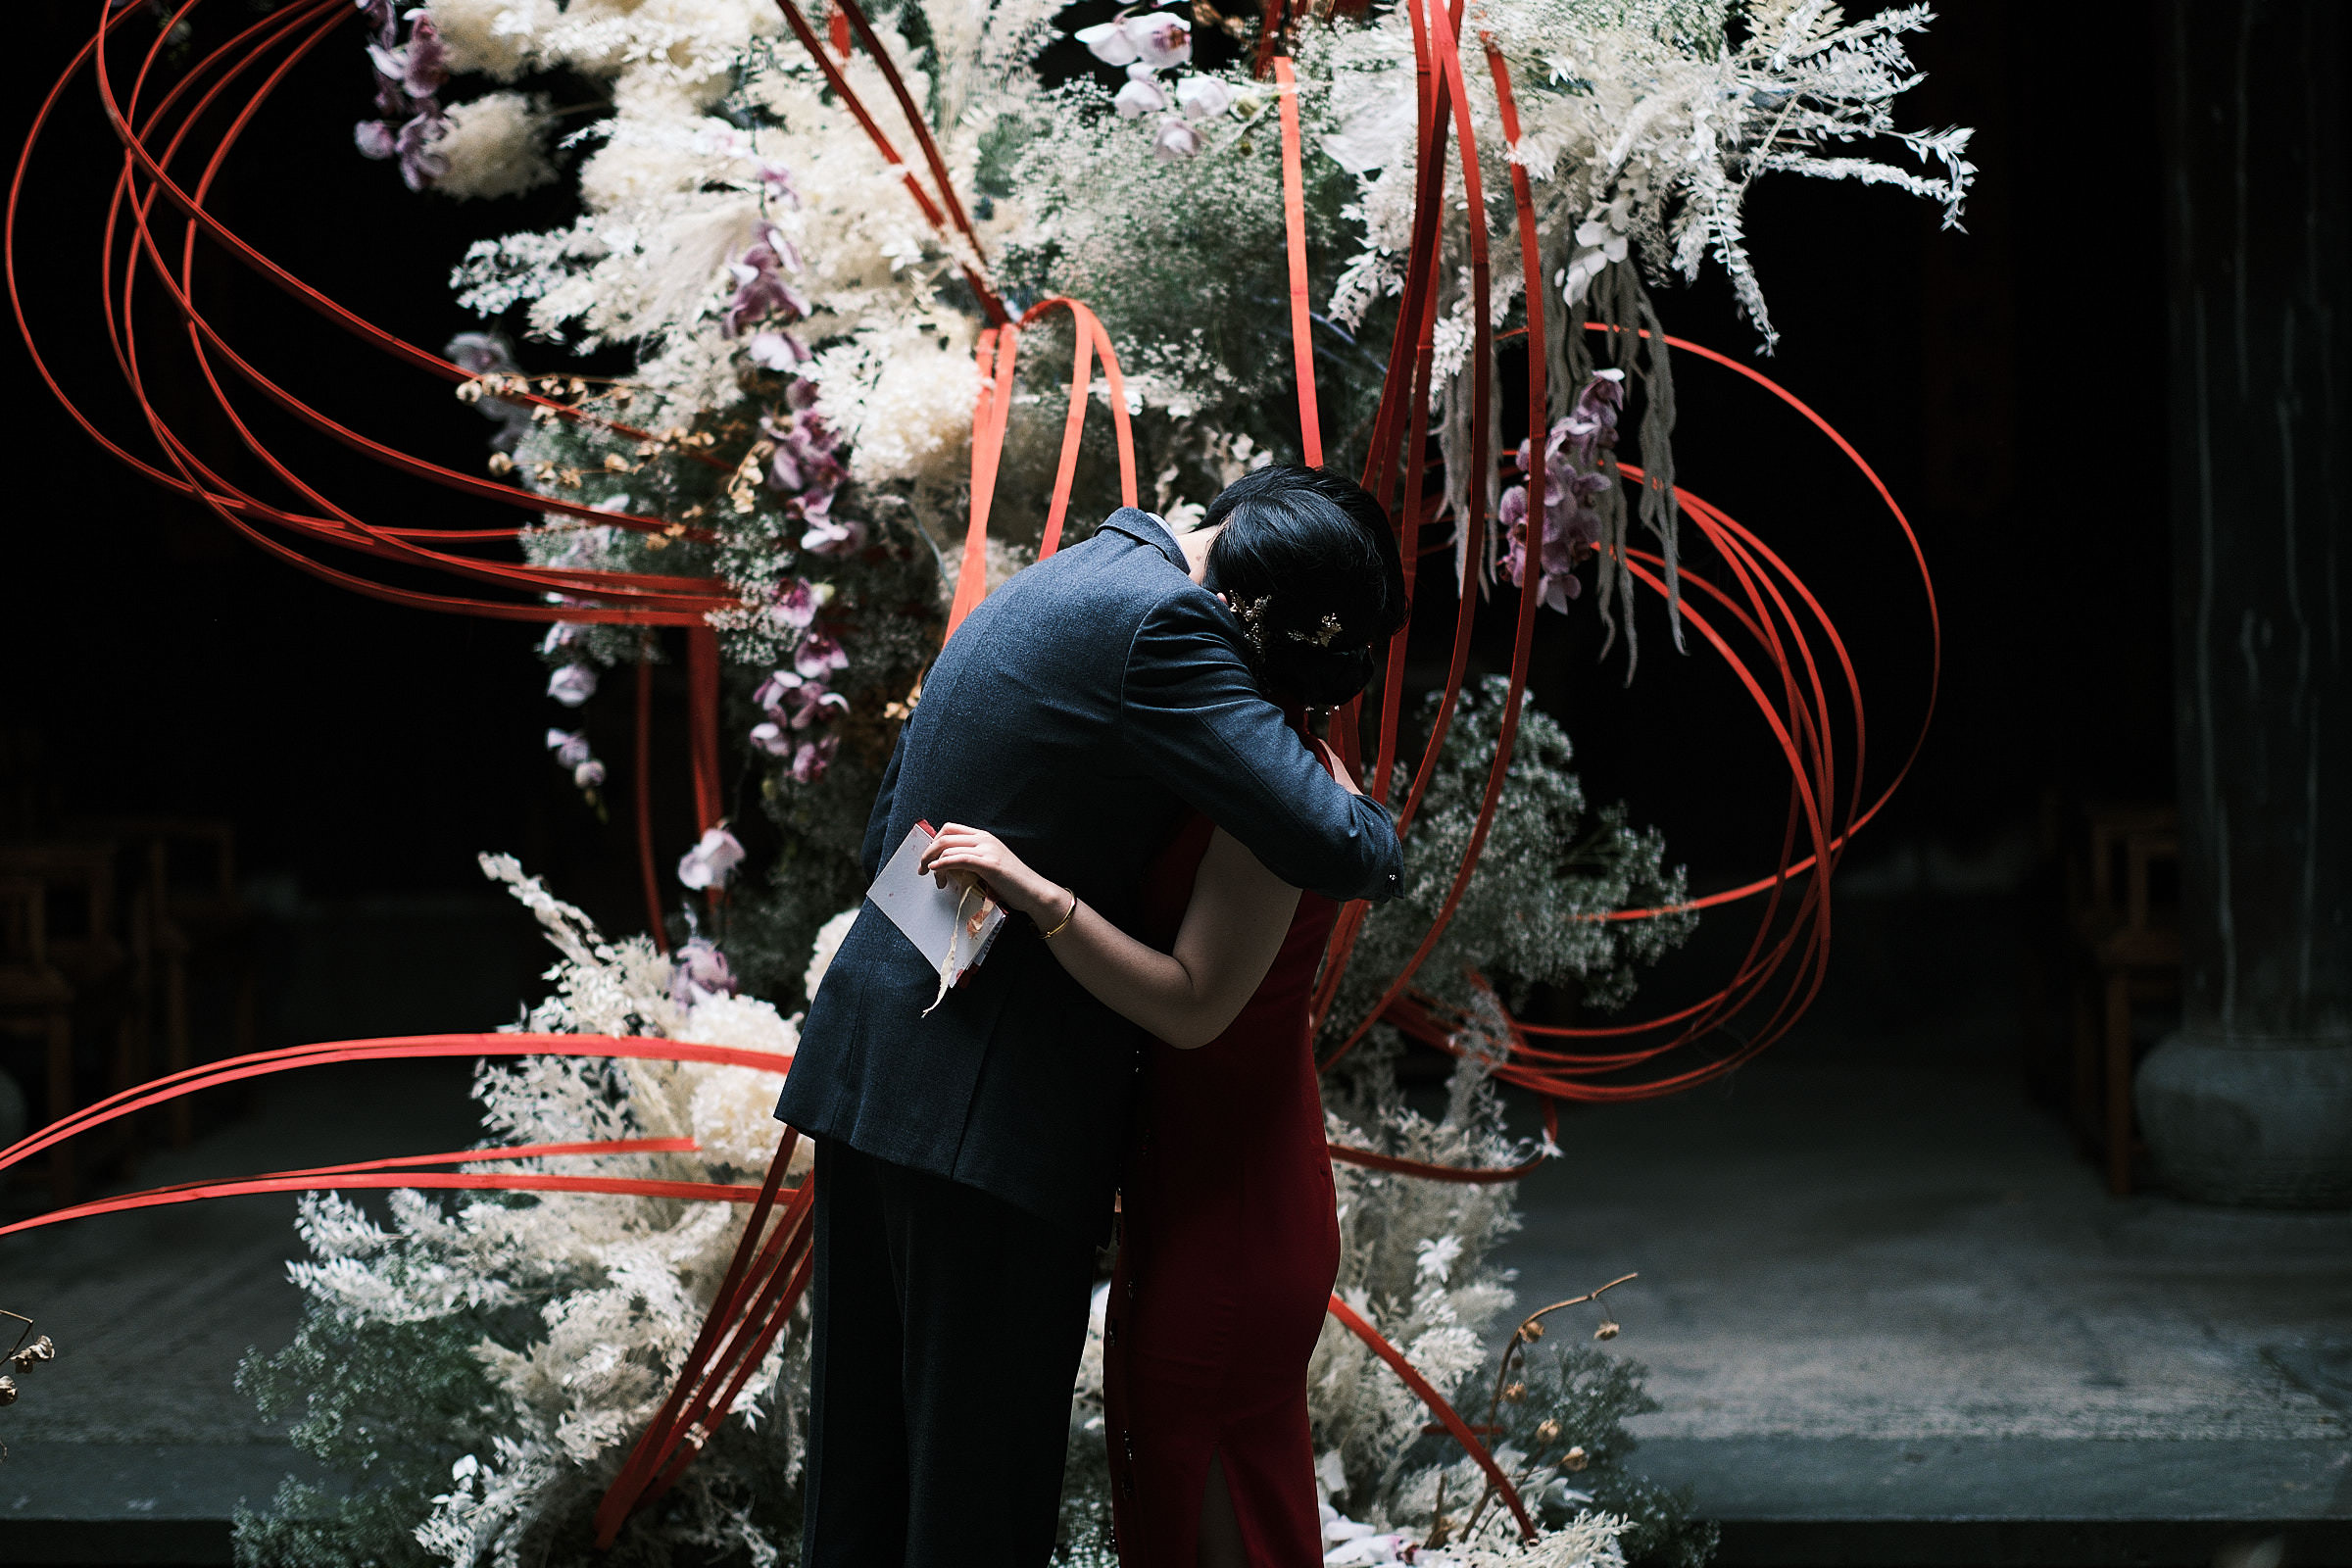 Groom Hugs Bride At China Wedding Ceremony In Front Of Floral Scultpture Arrangement